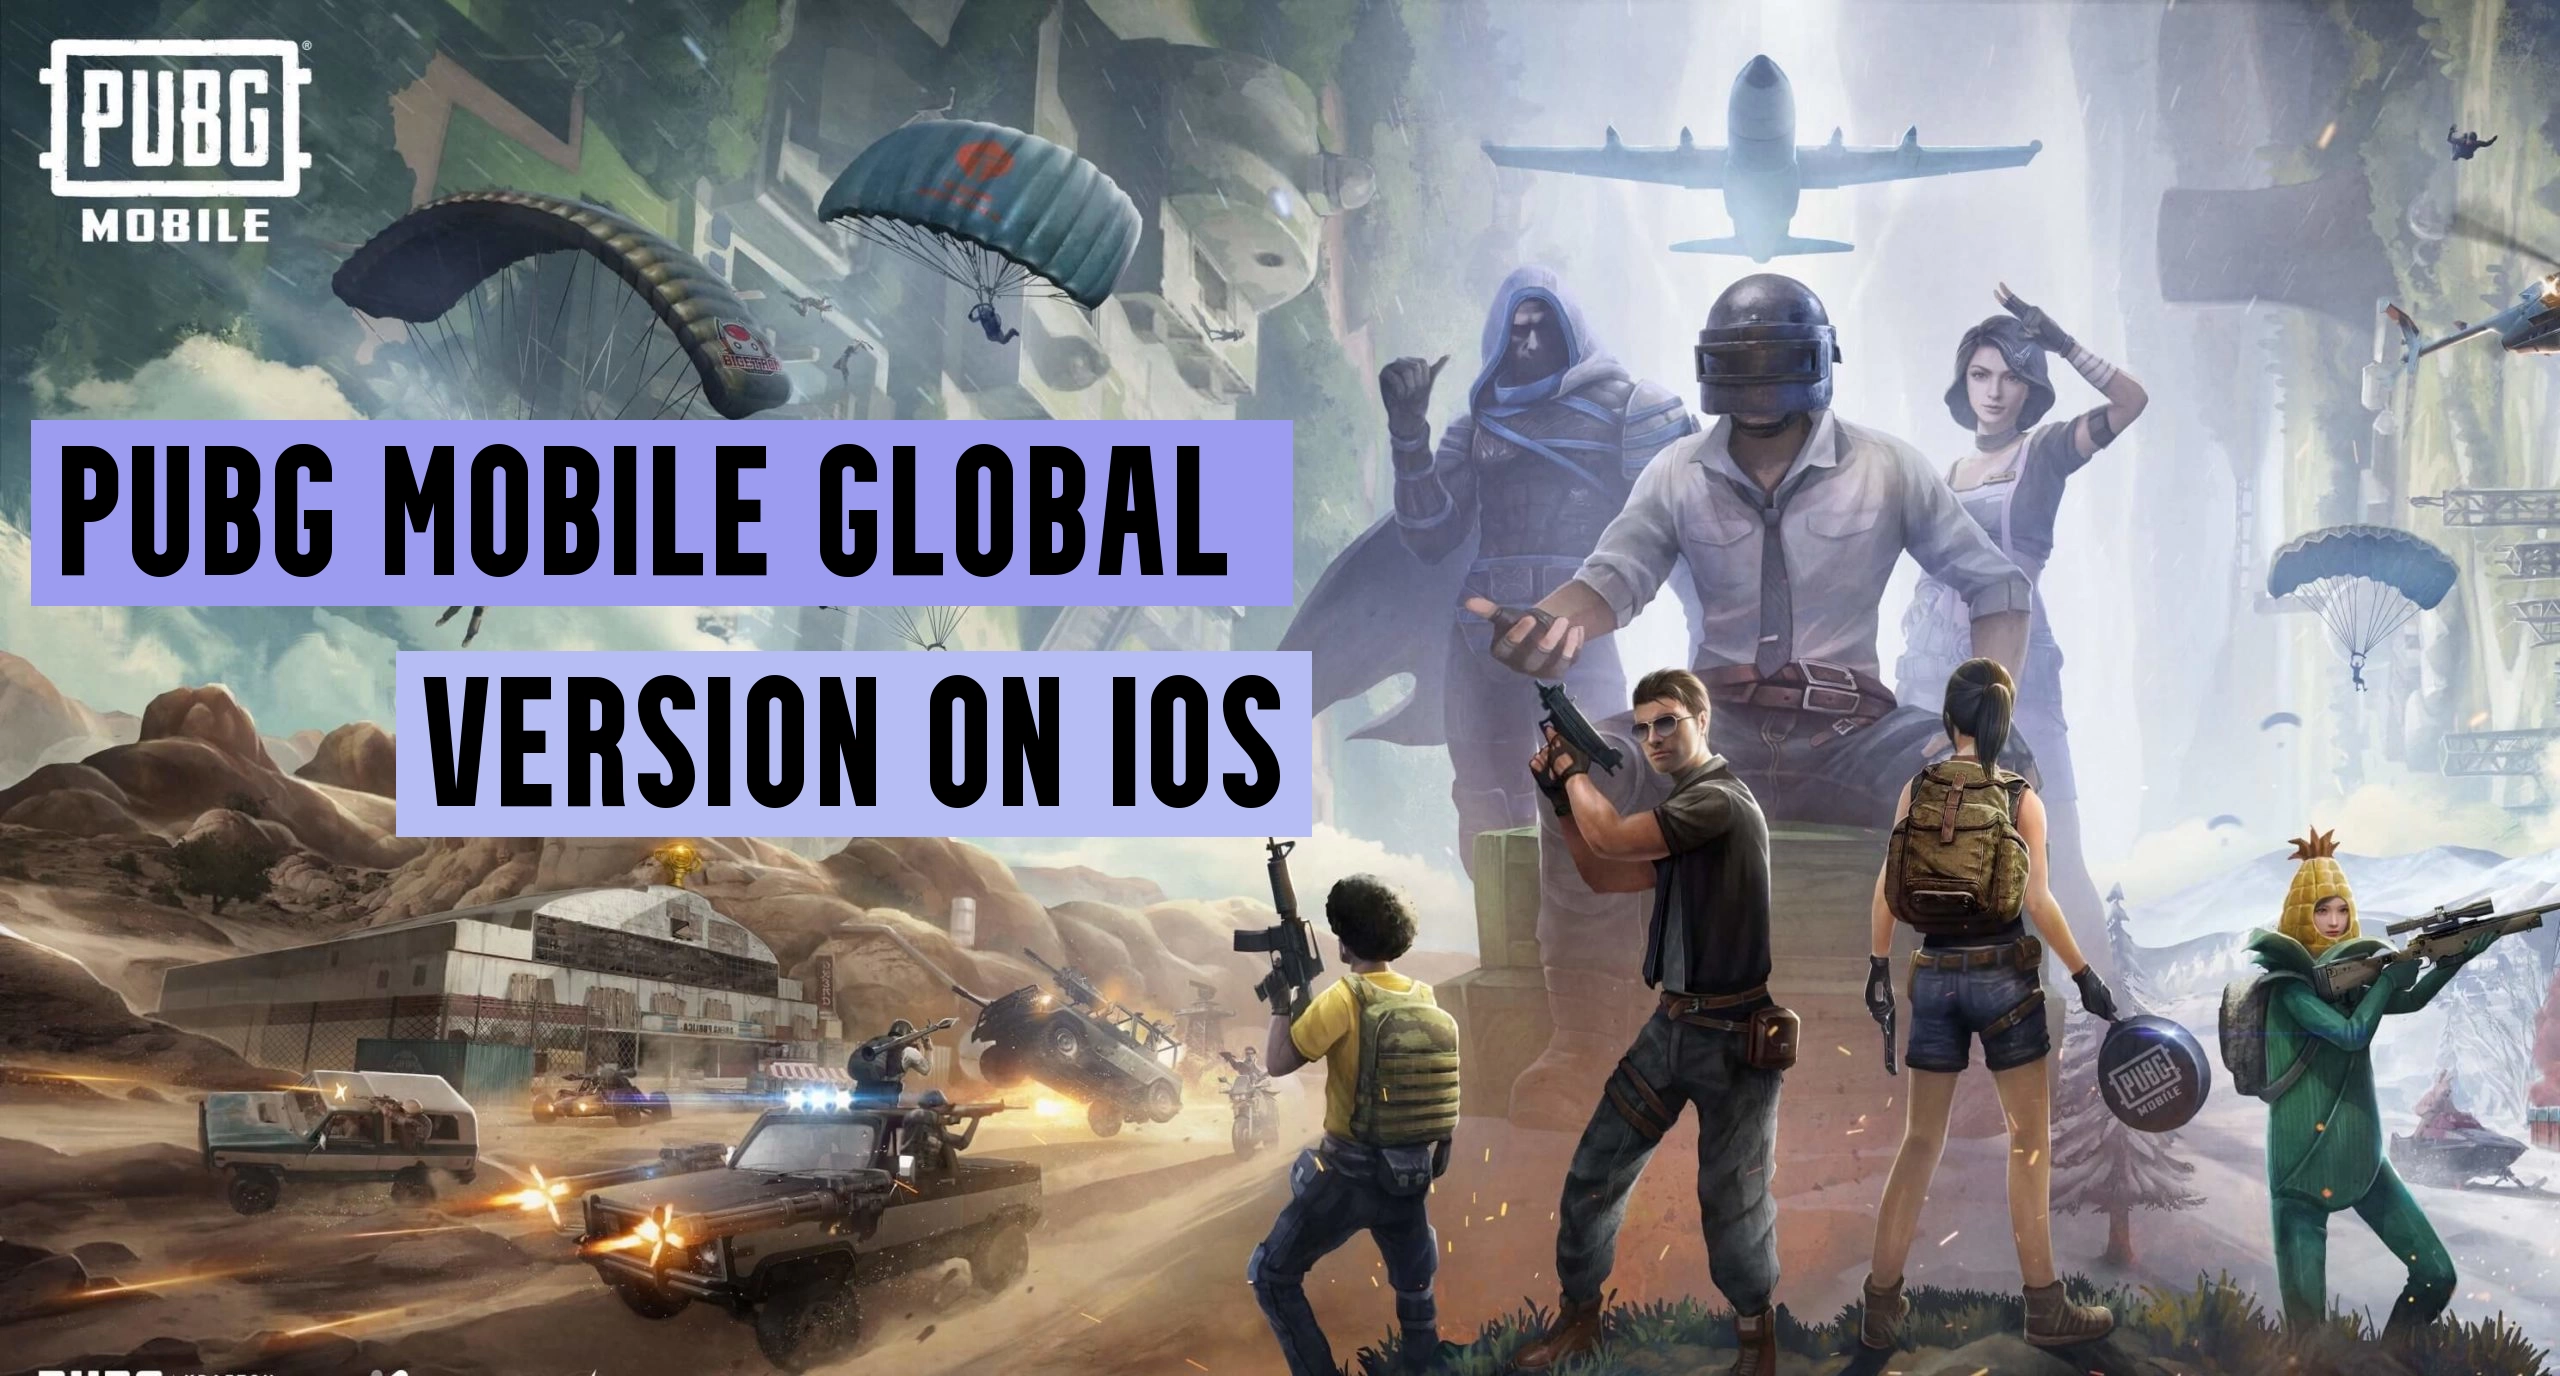 PUBG Mobile Global Version on iOS